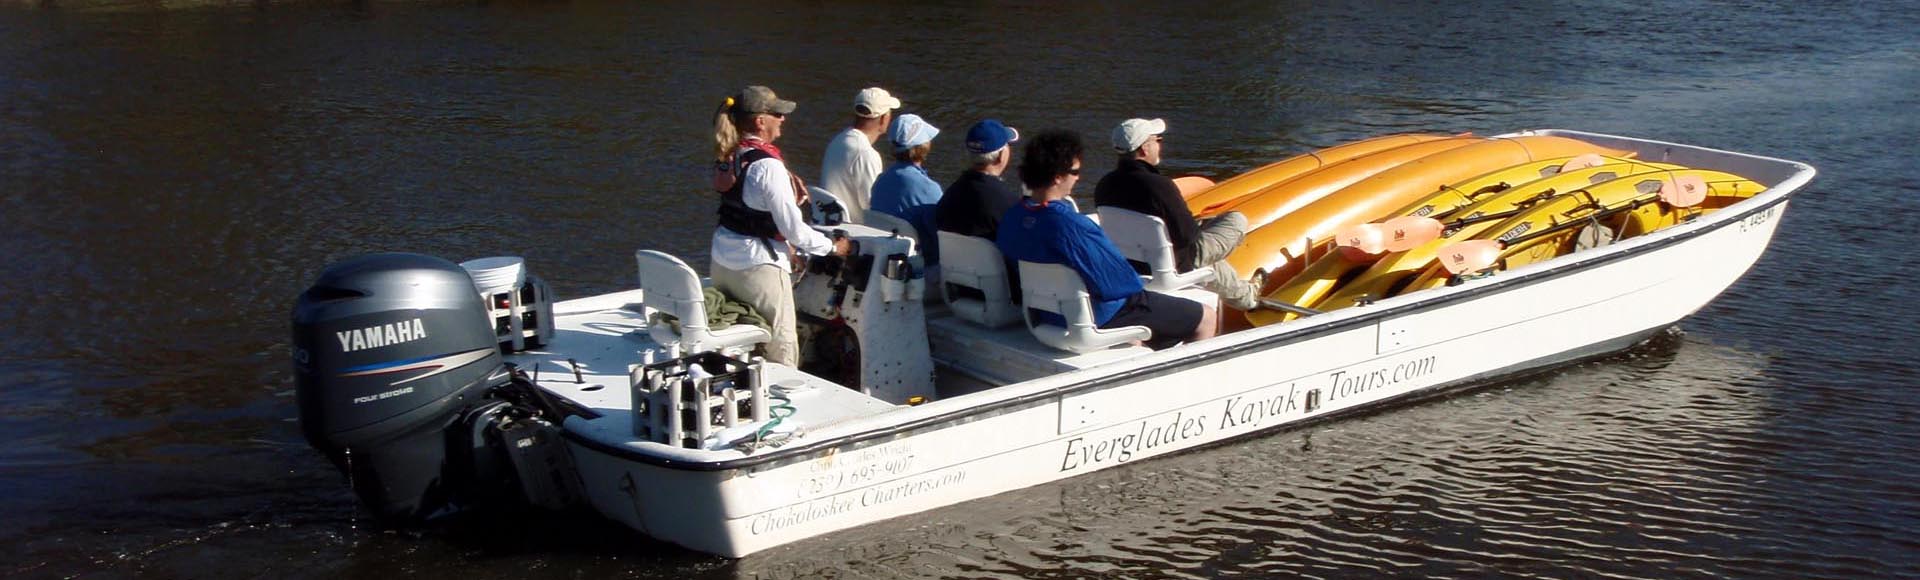 everglades city national park boat tours